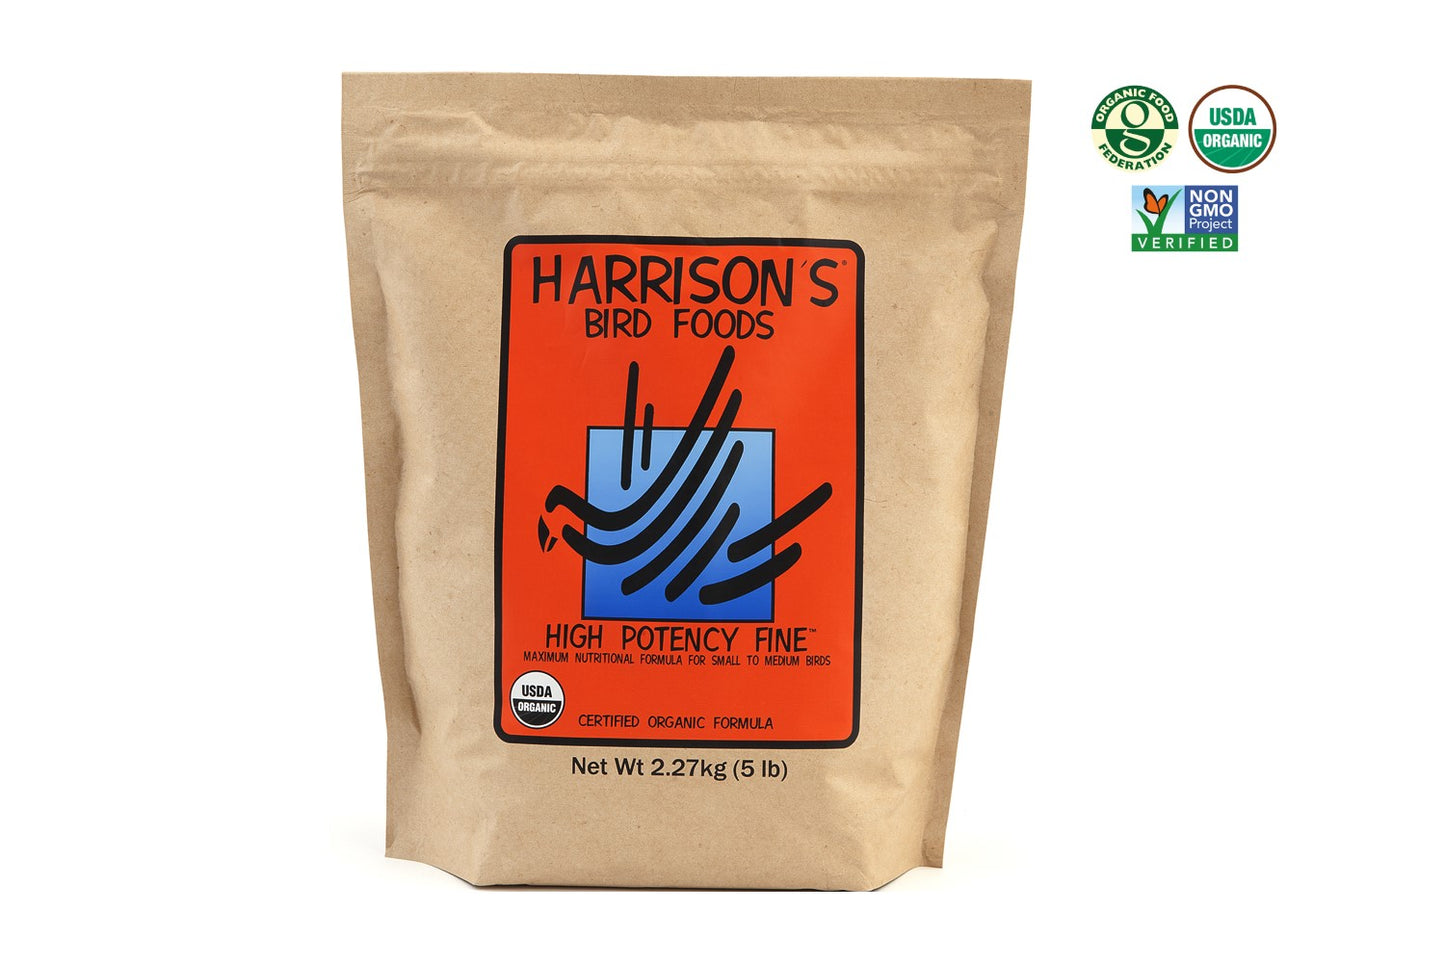 A 2.27kg bag of Harrison's High Potency Fine